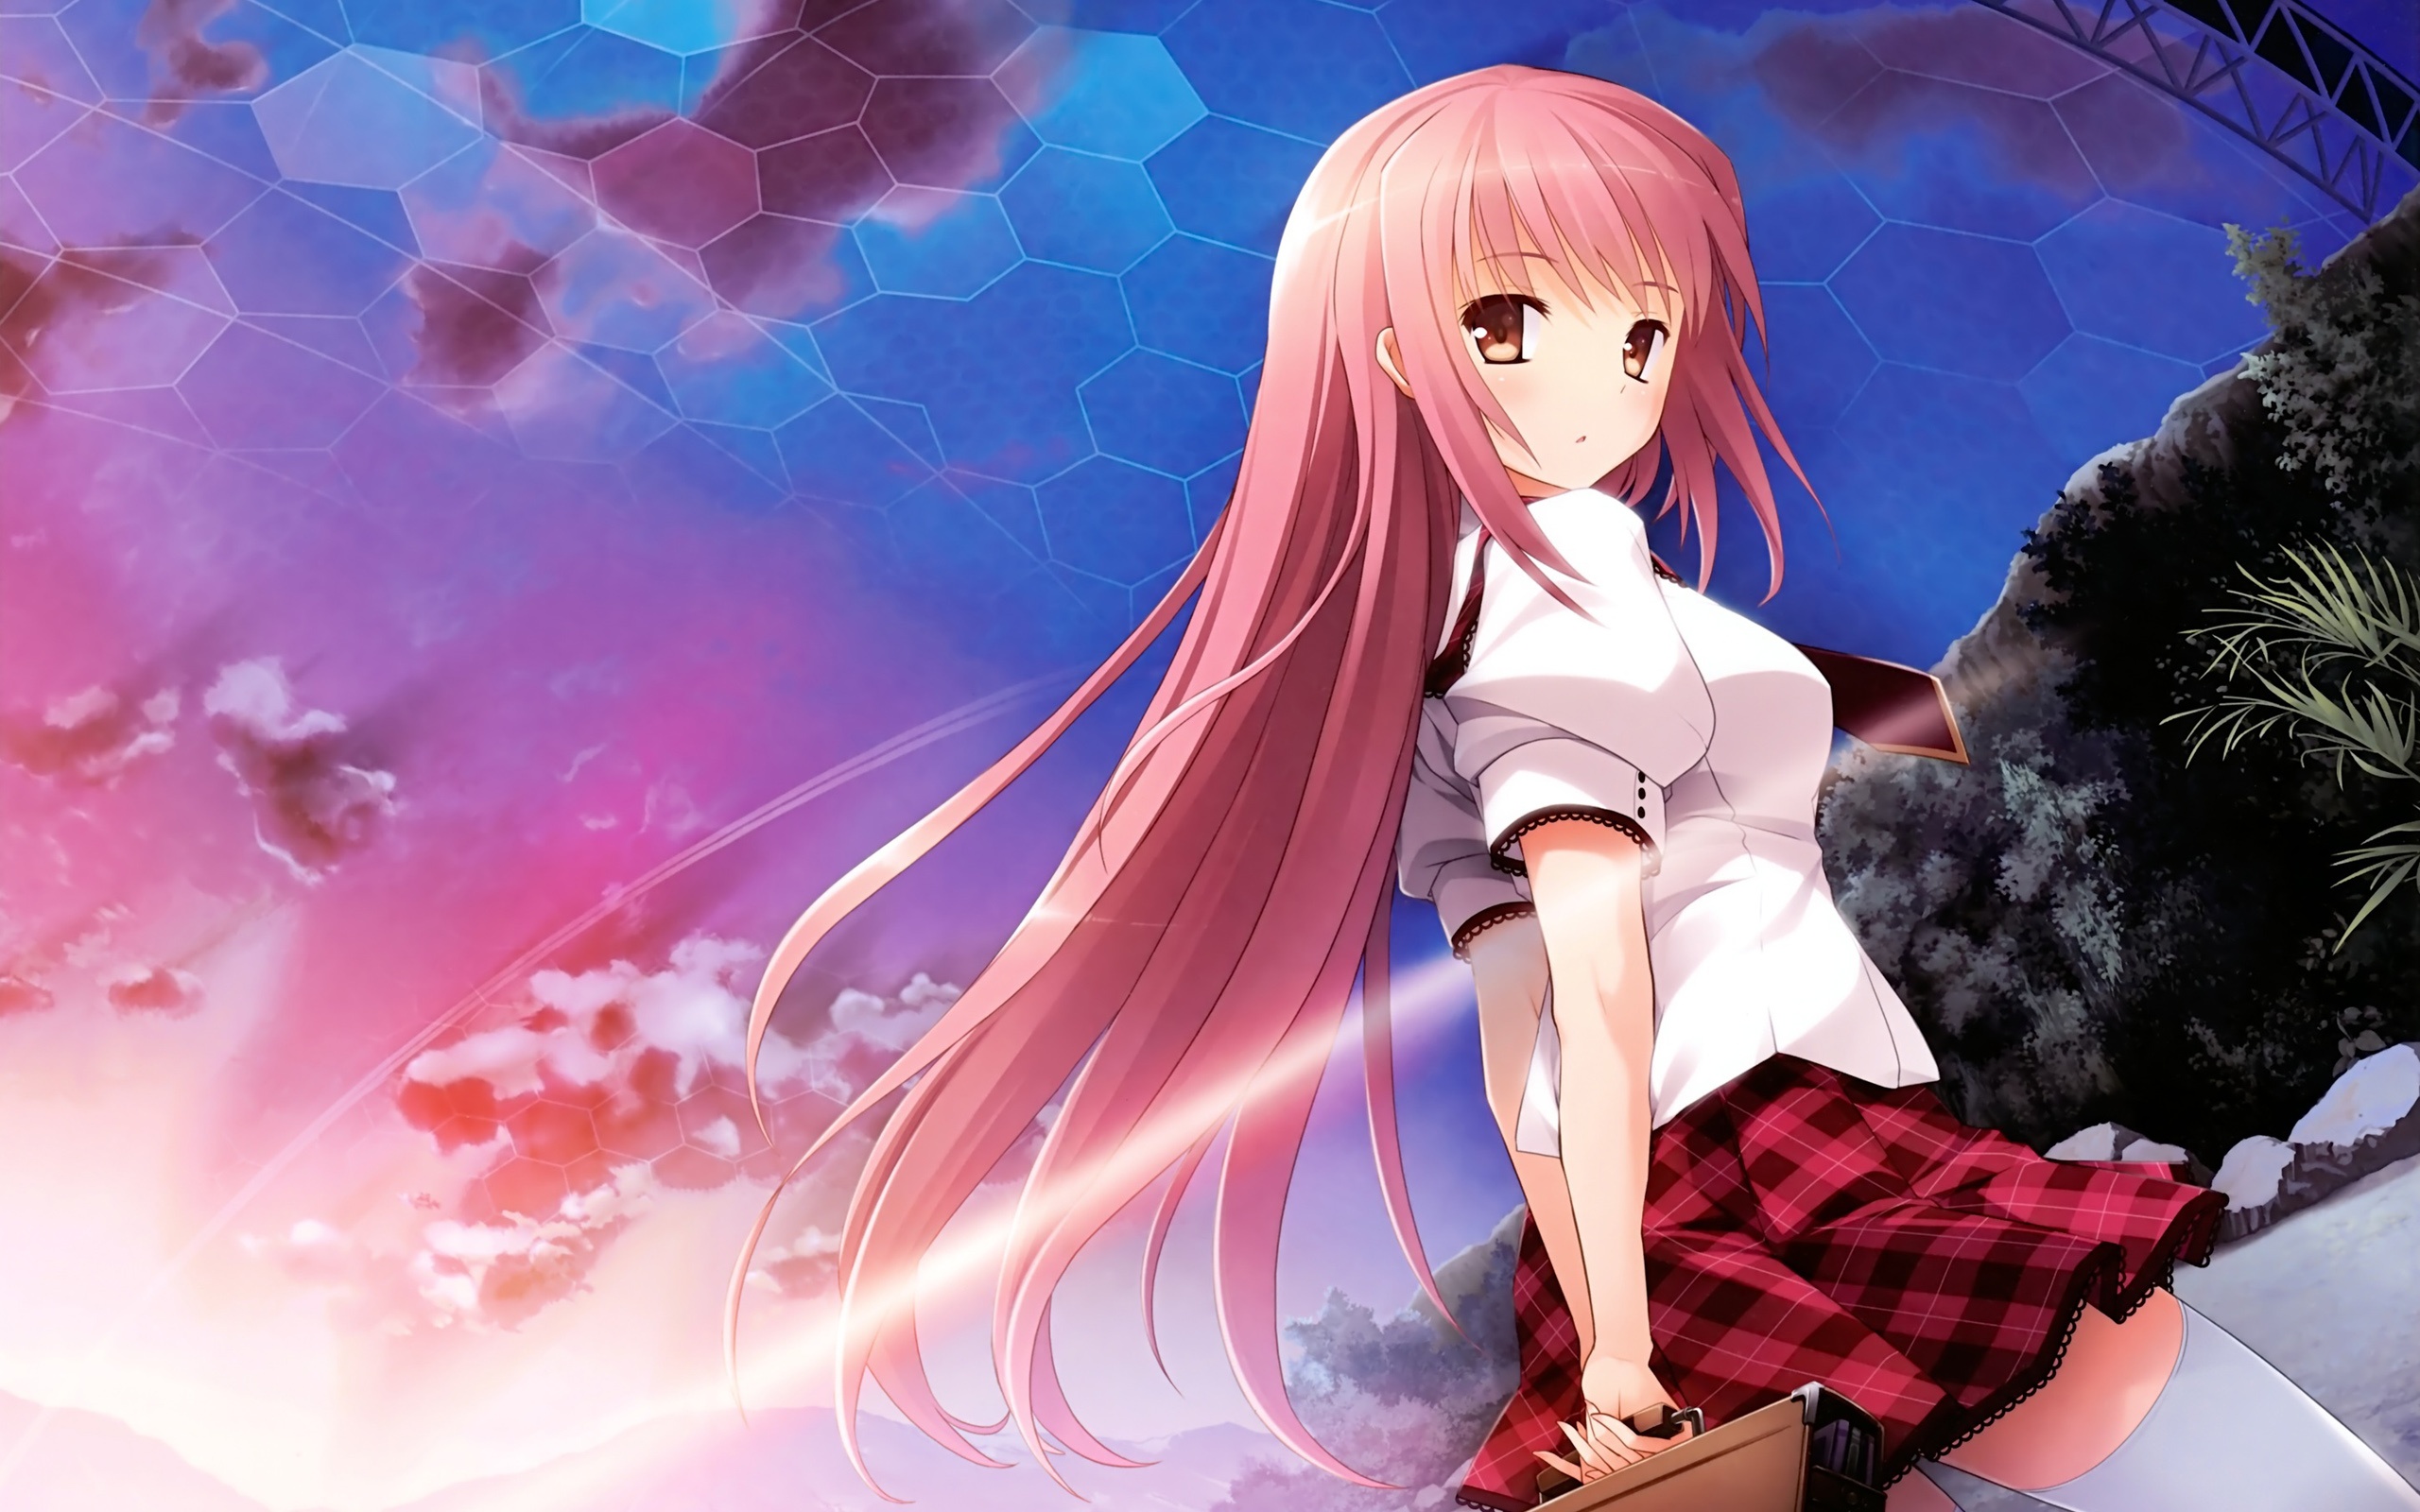 264 Cherry Blossom Wallpaper Anime Images Stock Photos  Vectors   Shutterstock